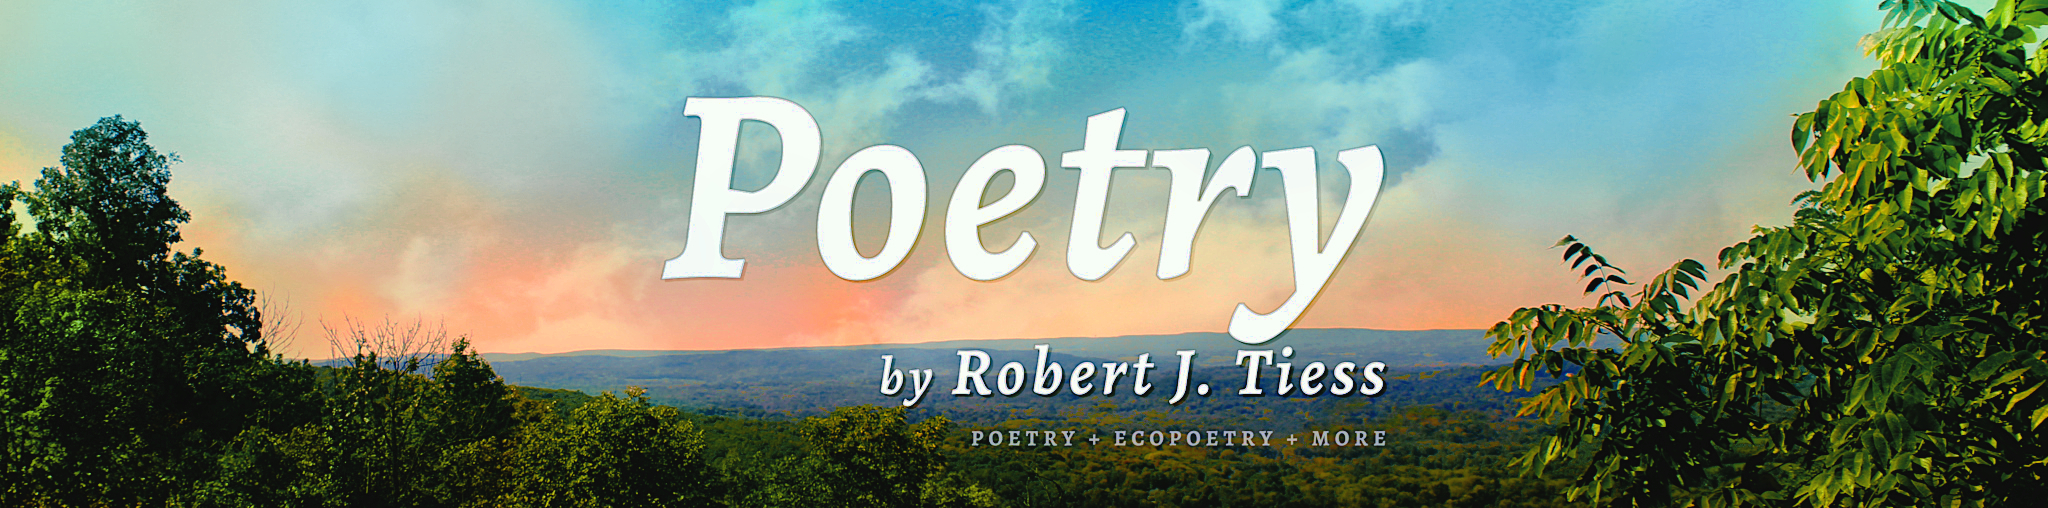 Poetry of Robert J. Tiess